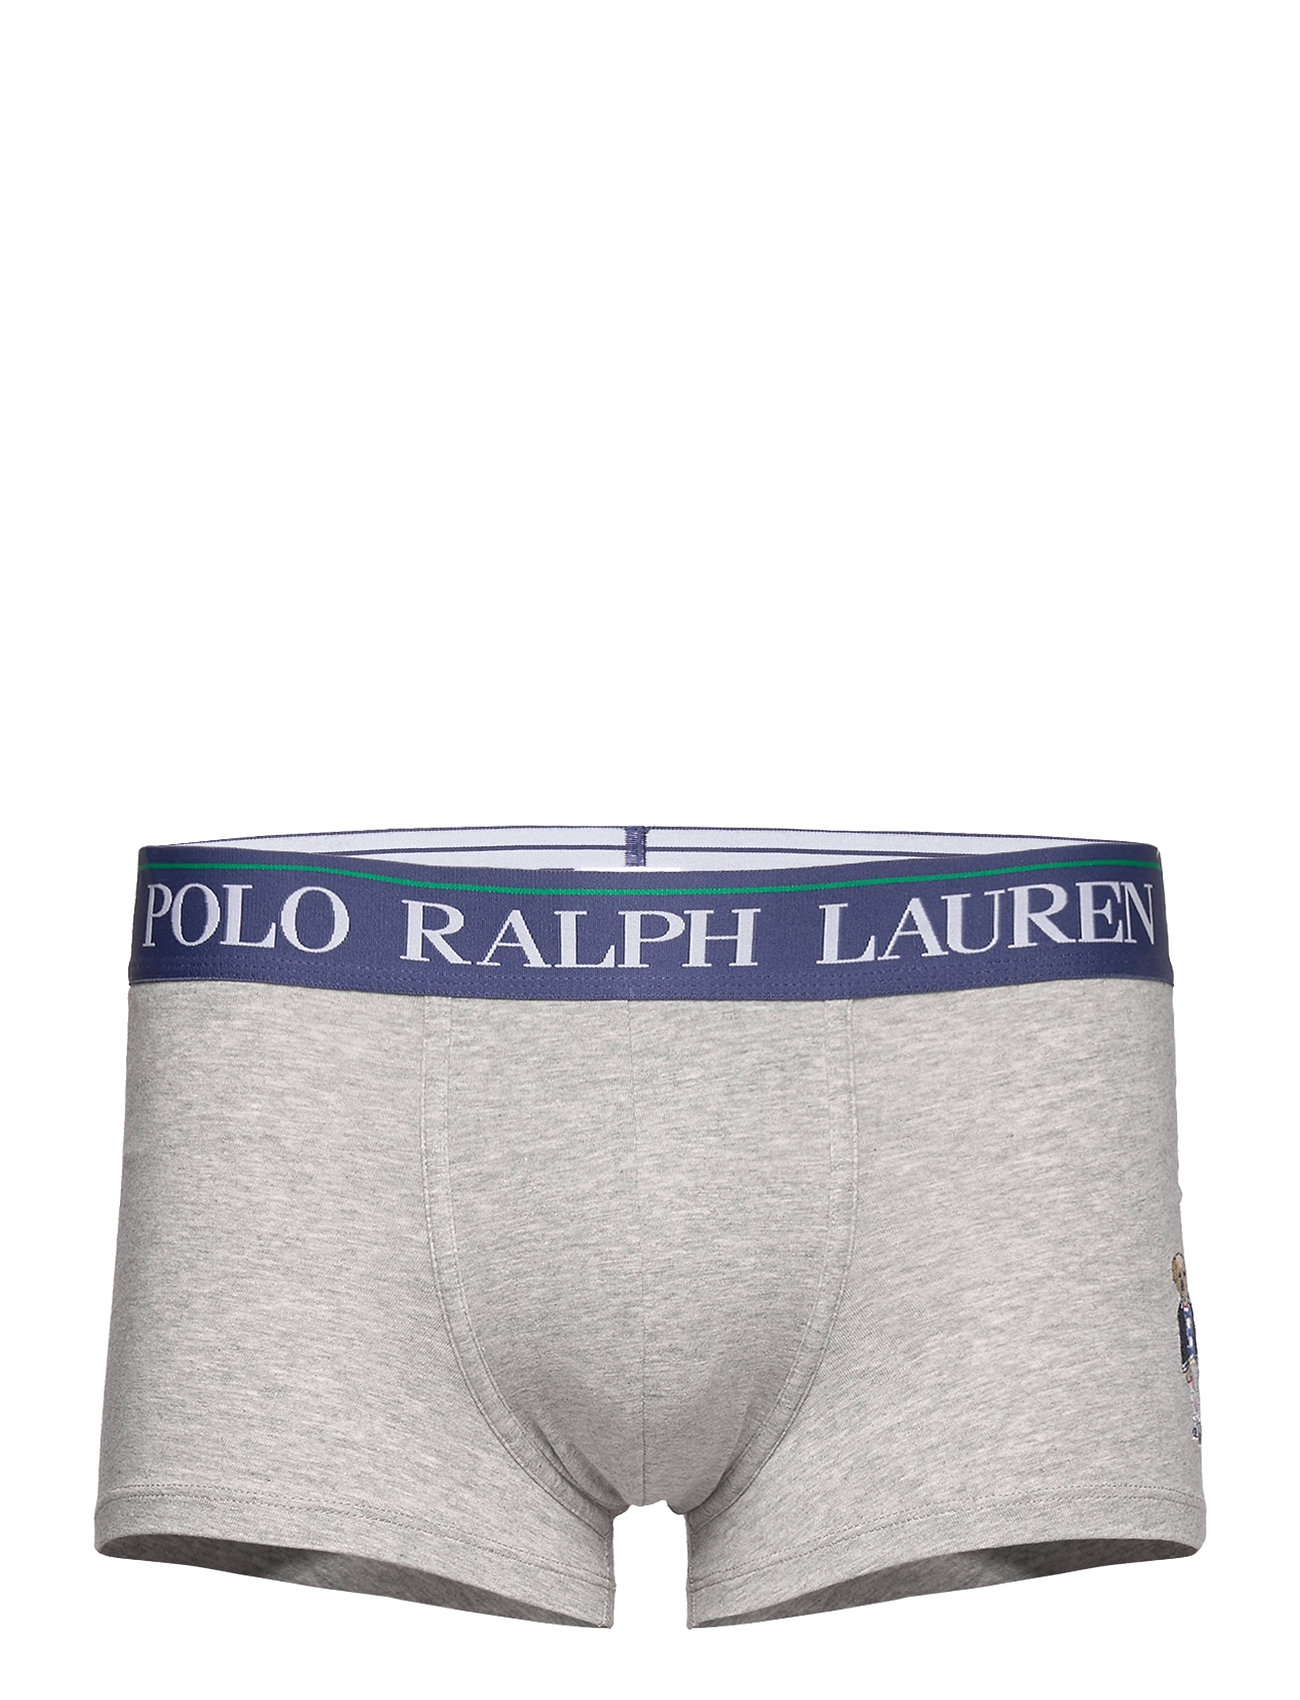 Polo Ralph Lauren Underwear Polo Bear Stretch Cotton Trunk Grey Polo Ralph Lauren Underwear